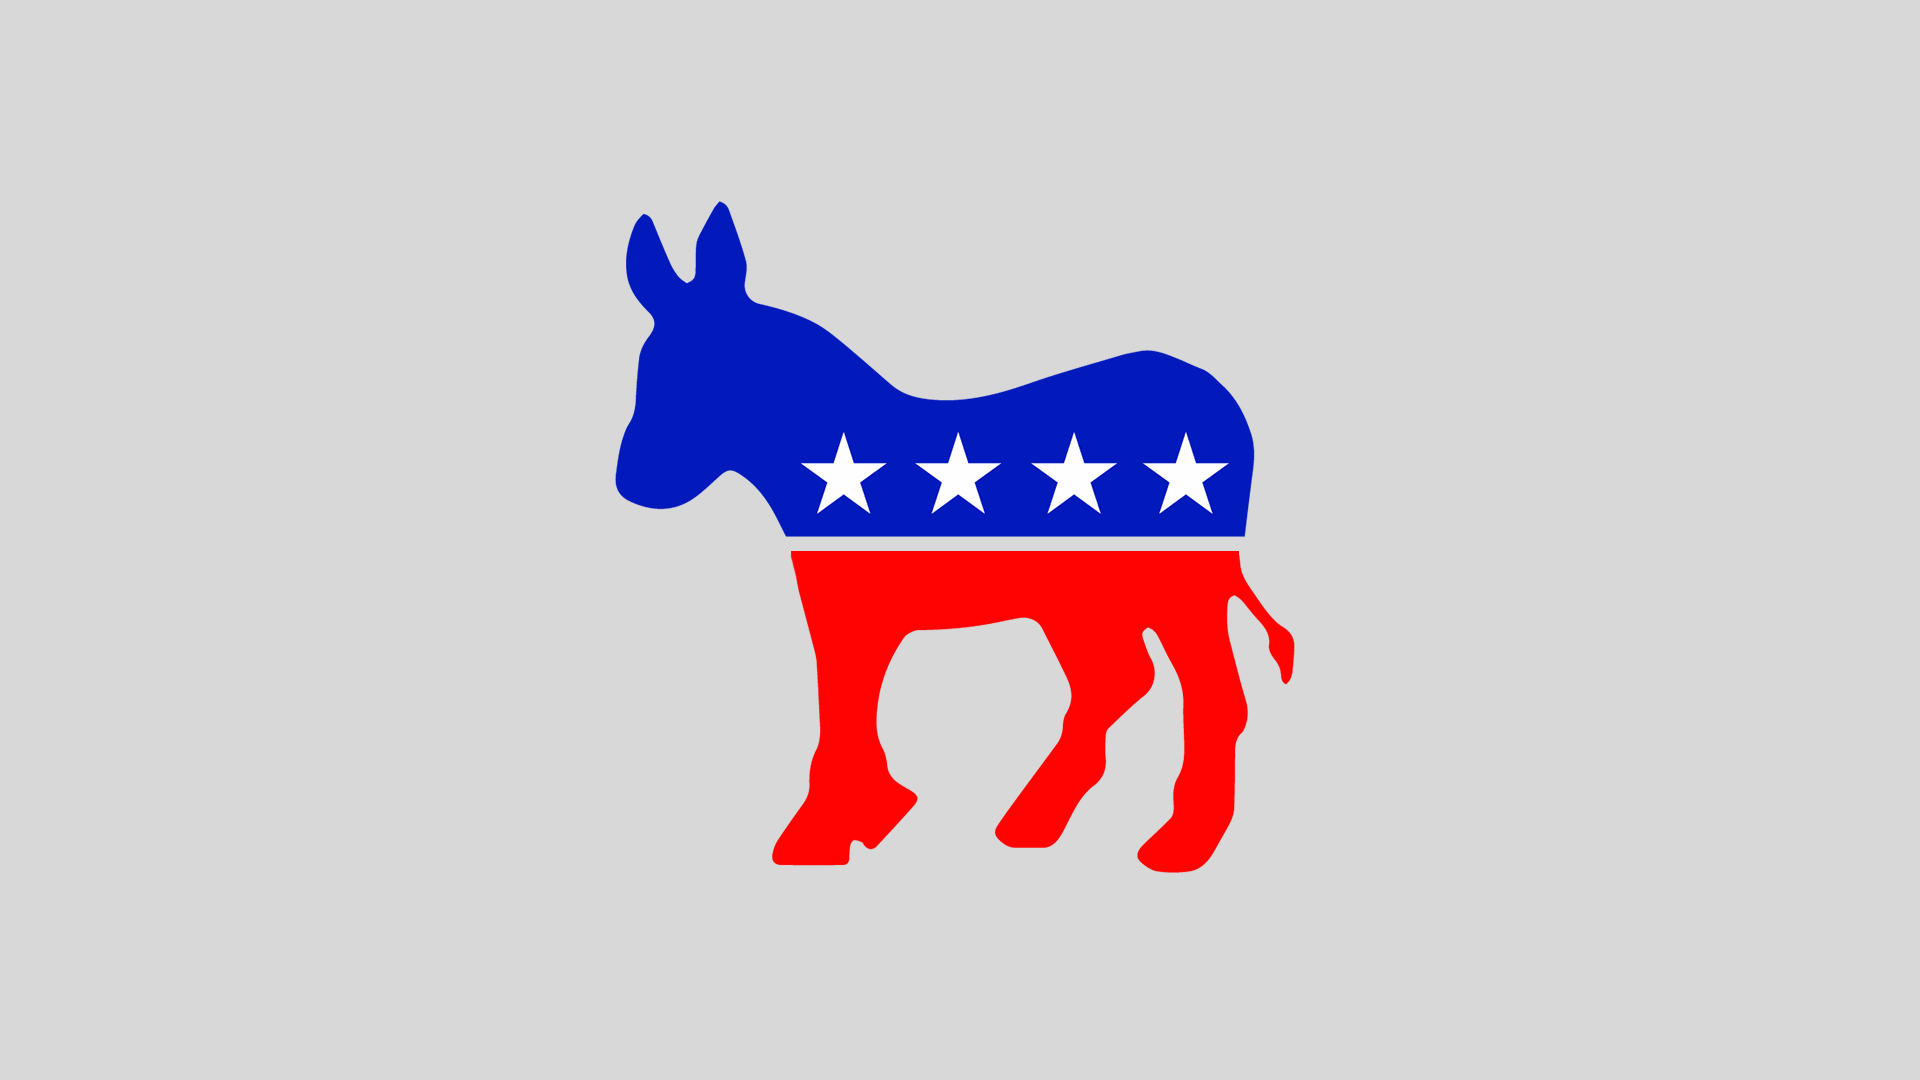 Democrats donkey